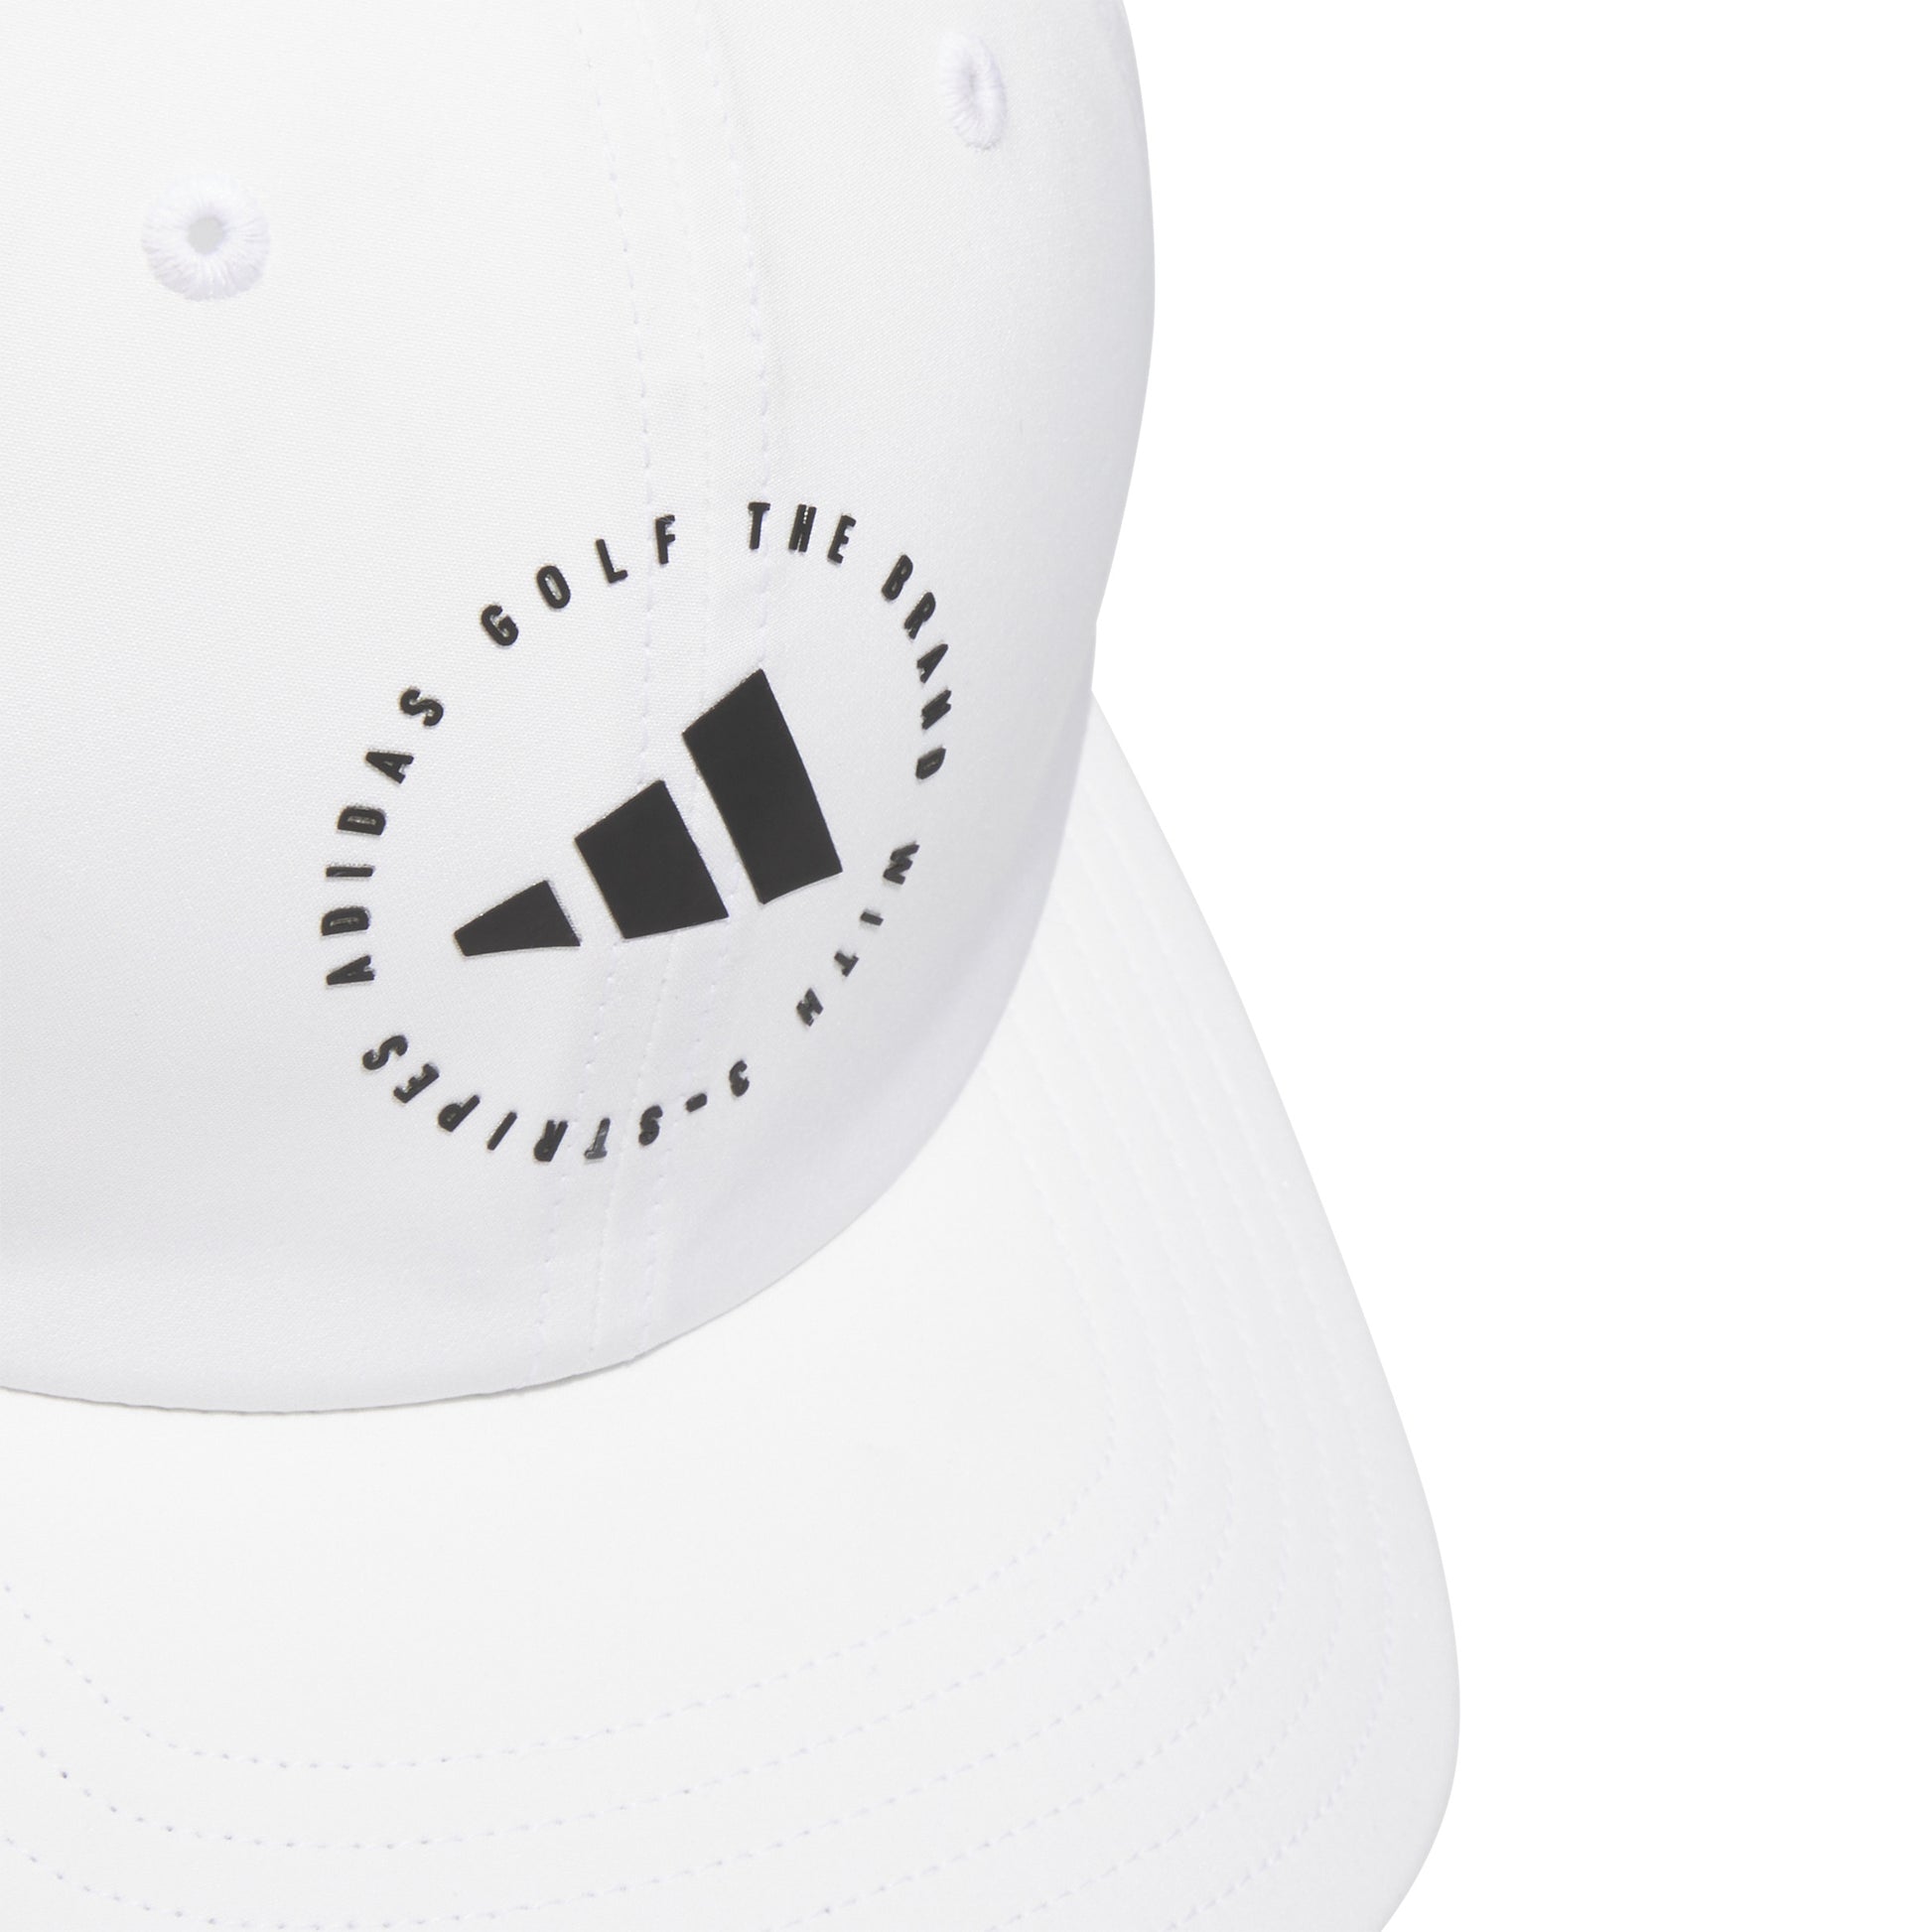 adidas Ladies Ponytail Golf Cap in White